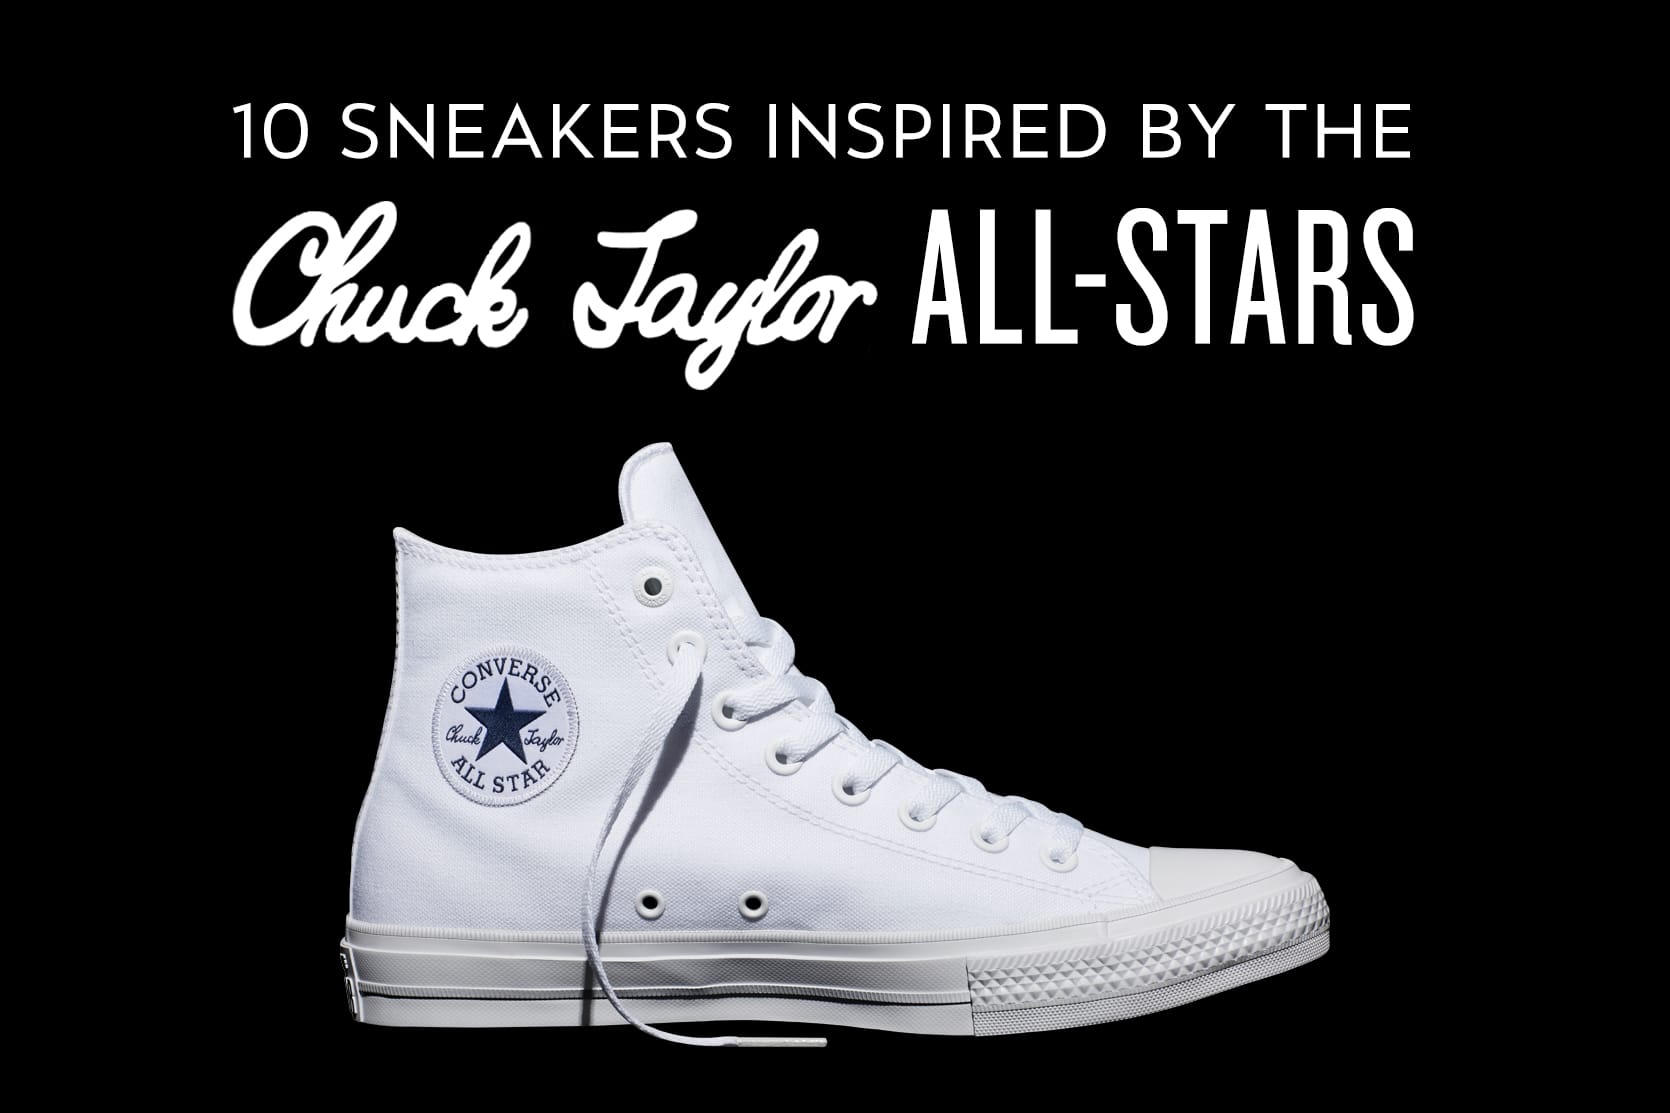 chucks sneakers